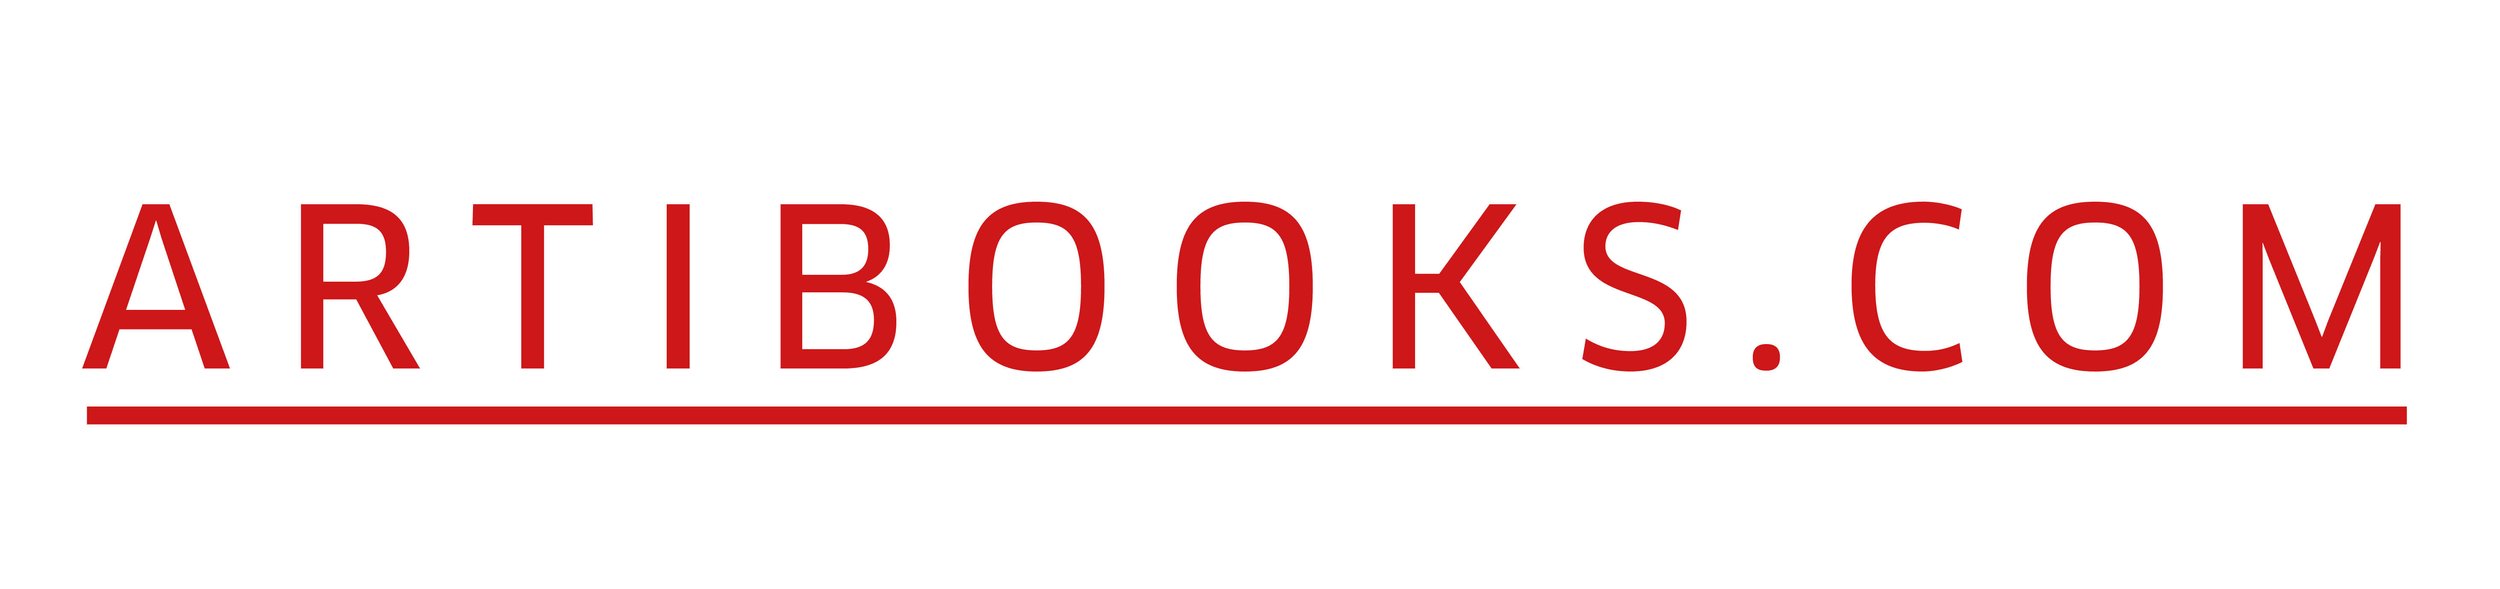 Artibooks logo.jpg